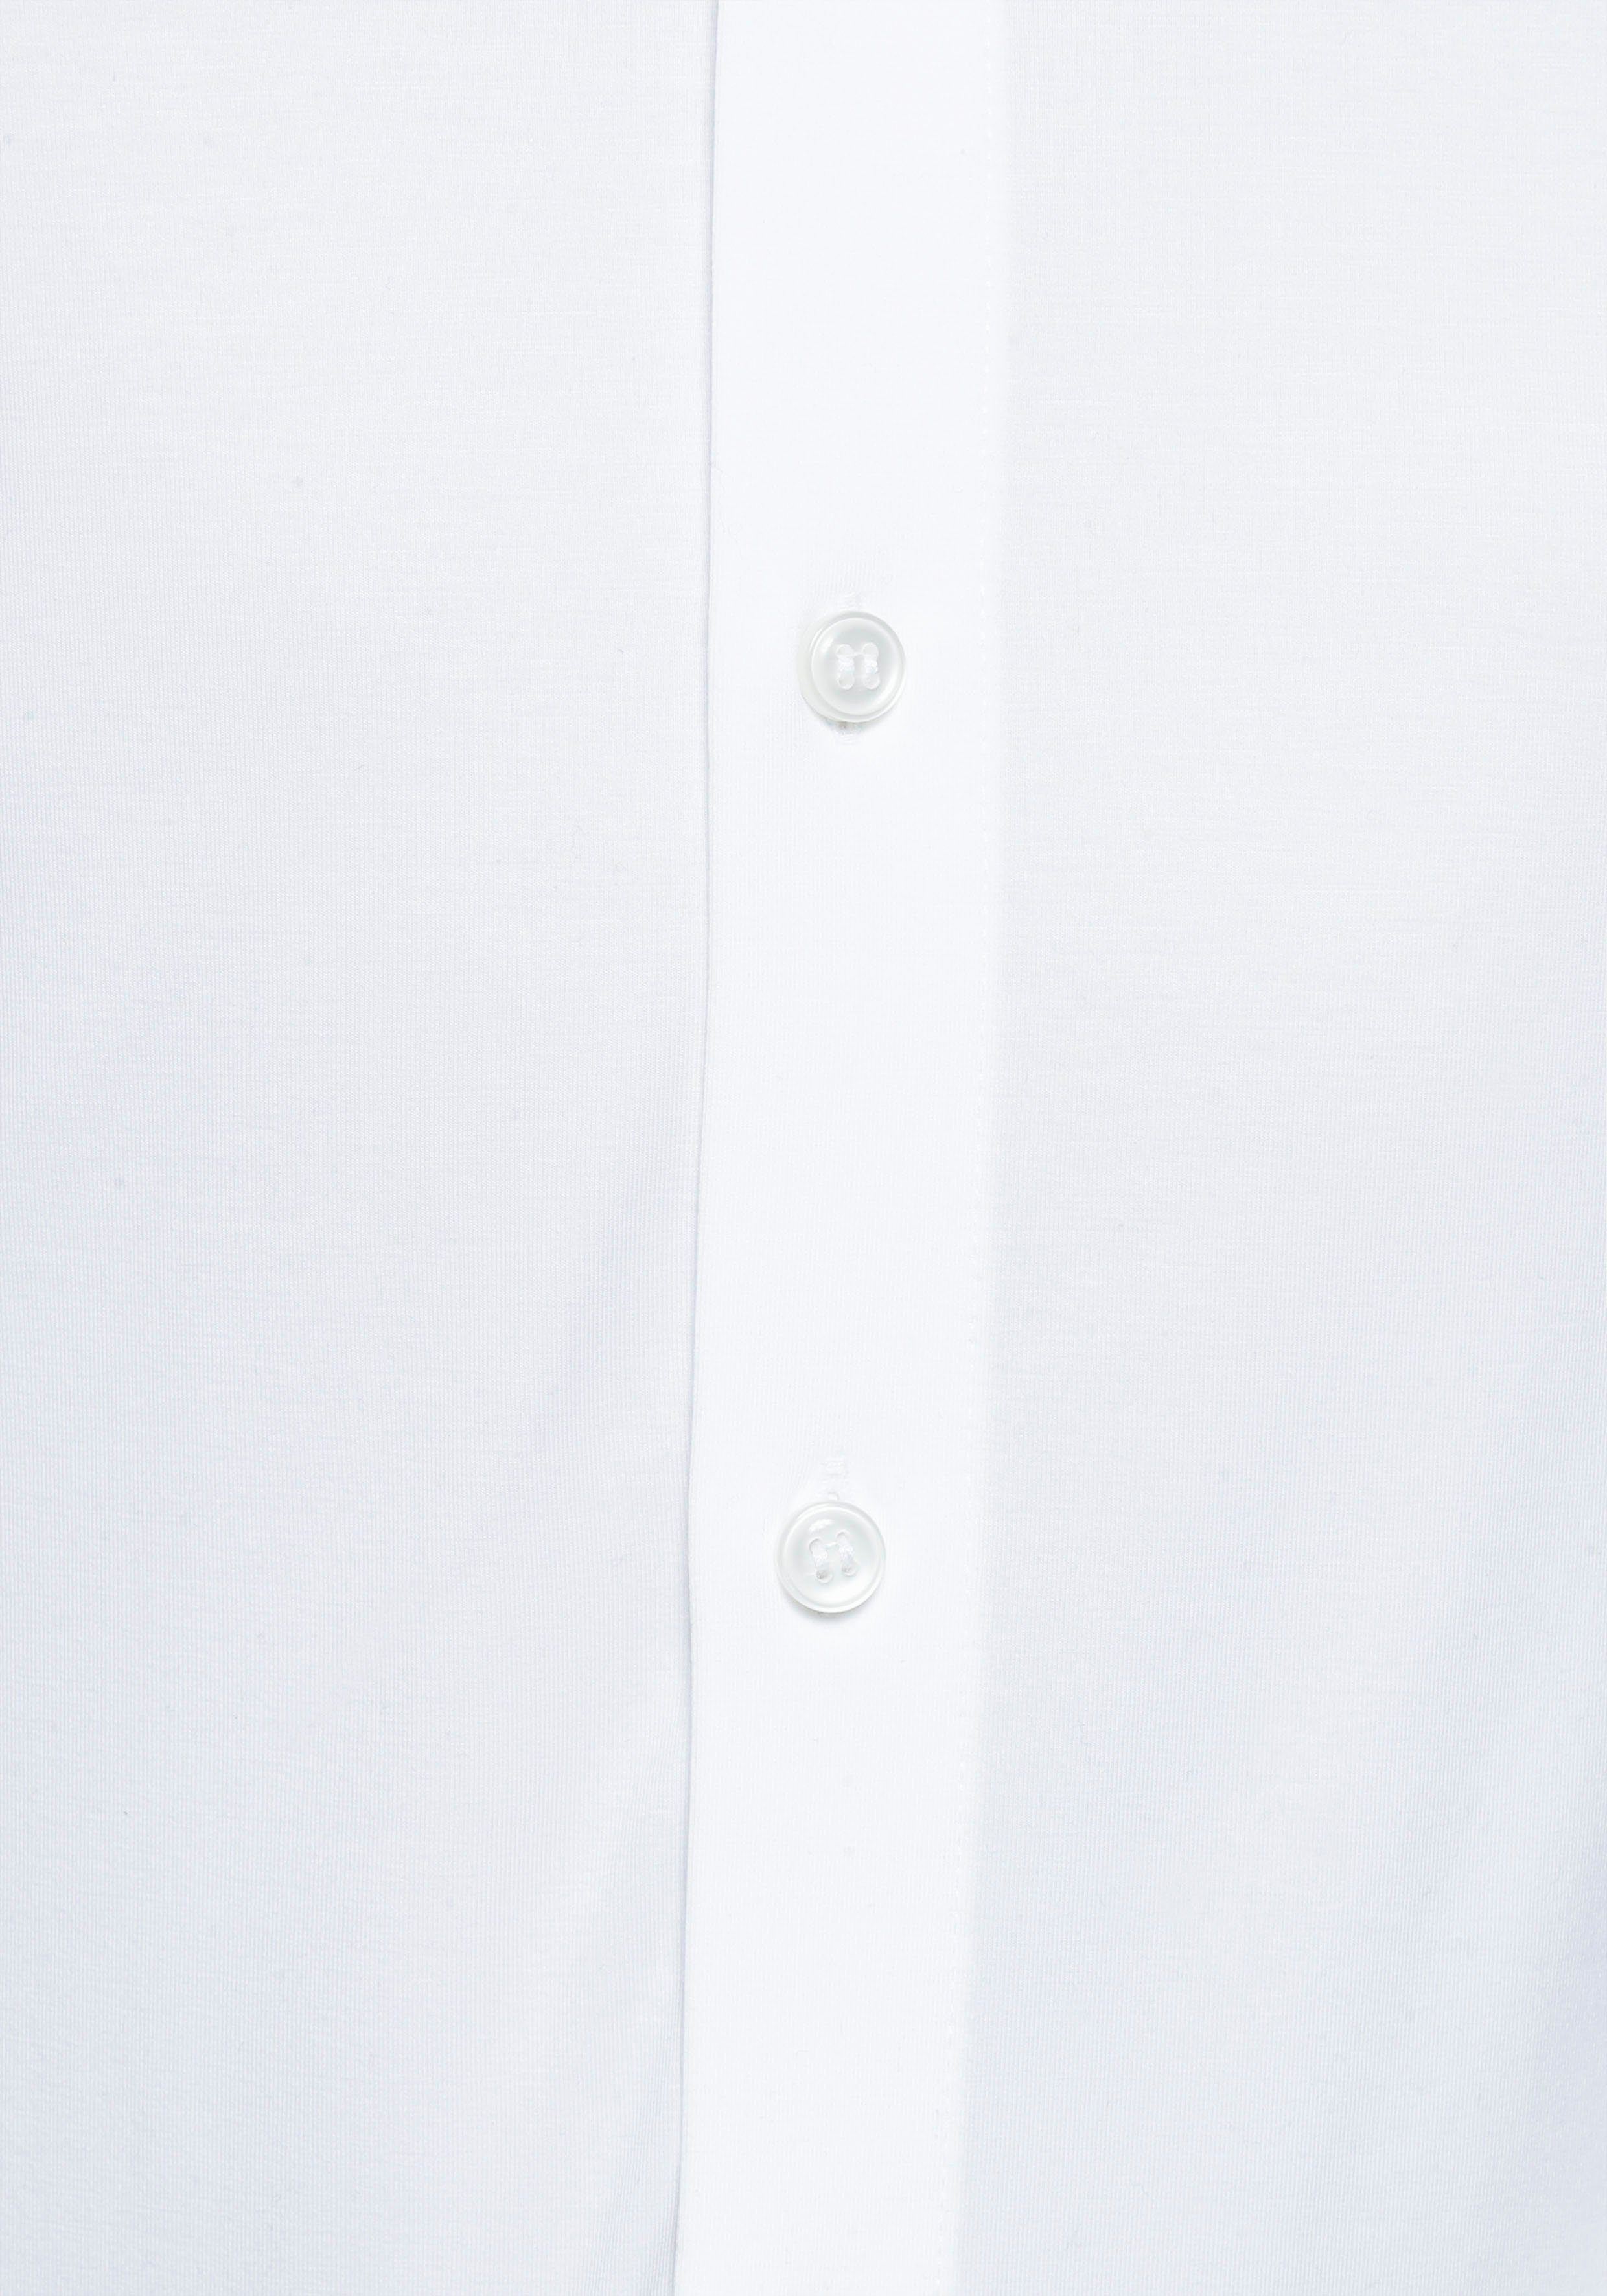 body Five Level Jersey fit OLYMP in Businesshemd weiß Qualität